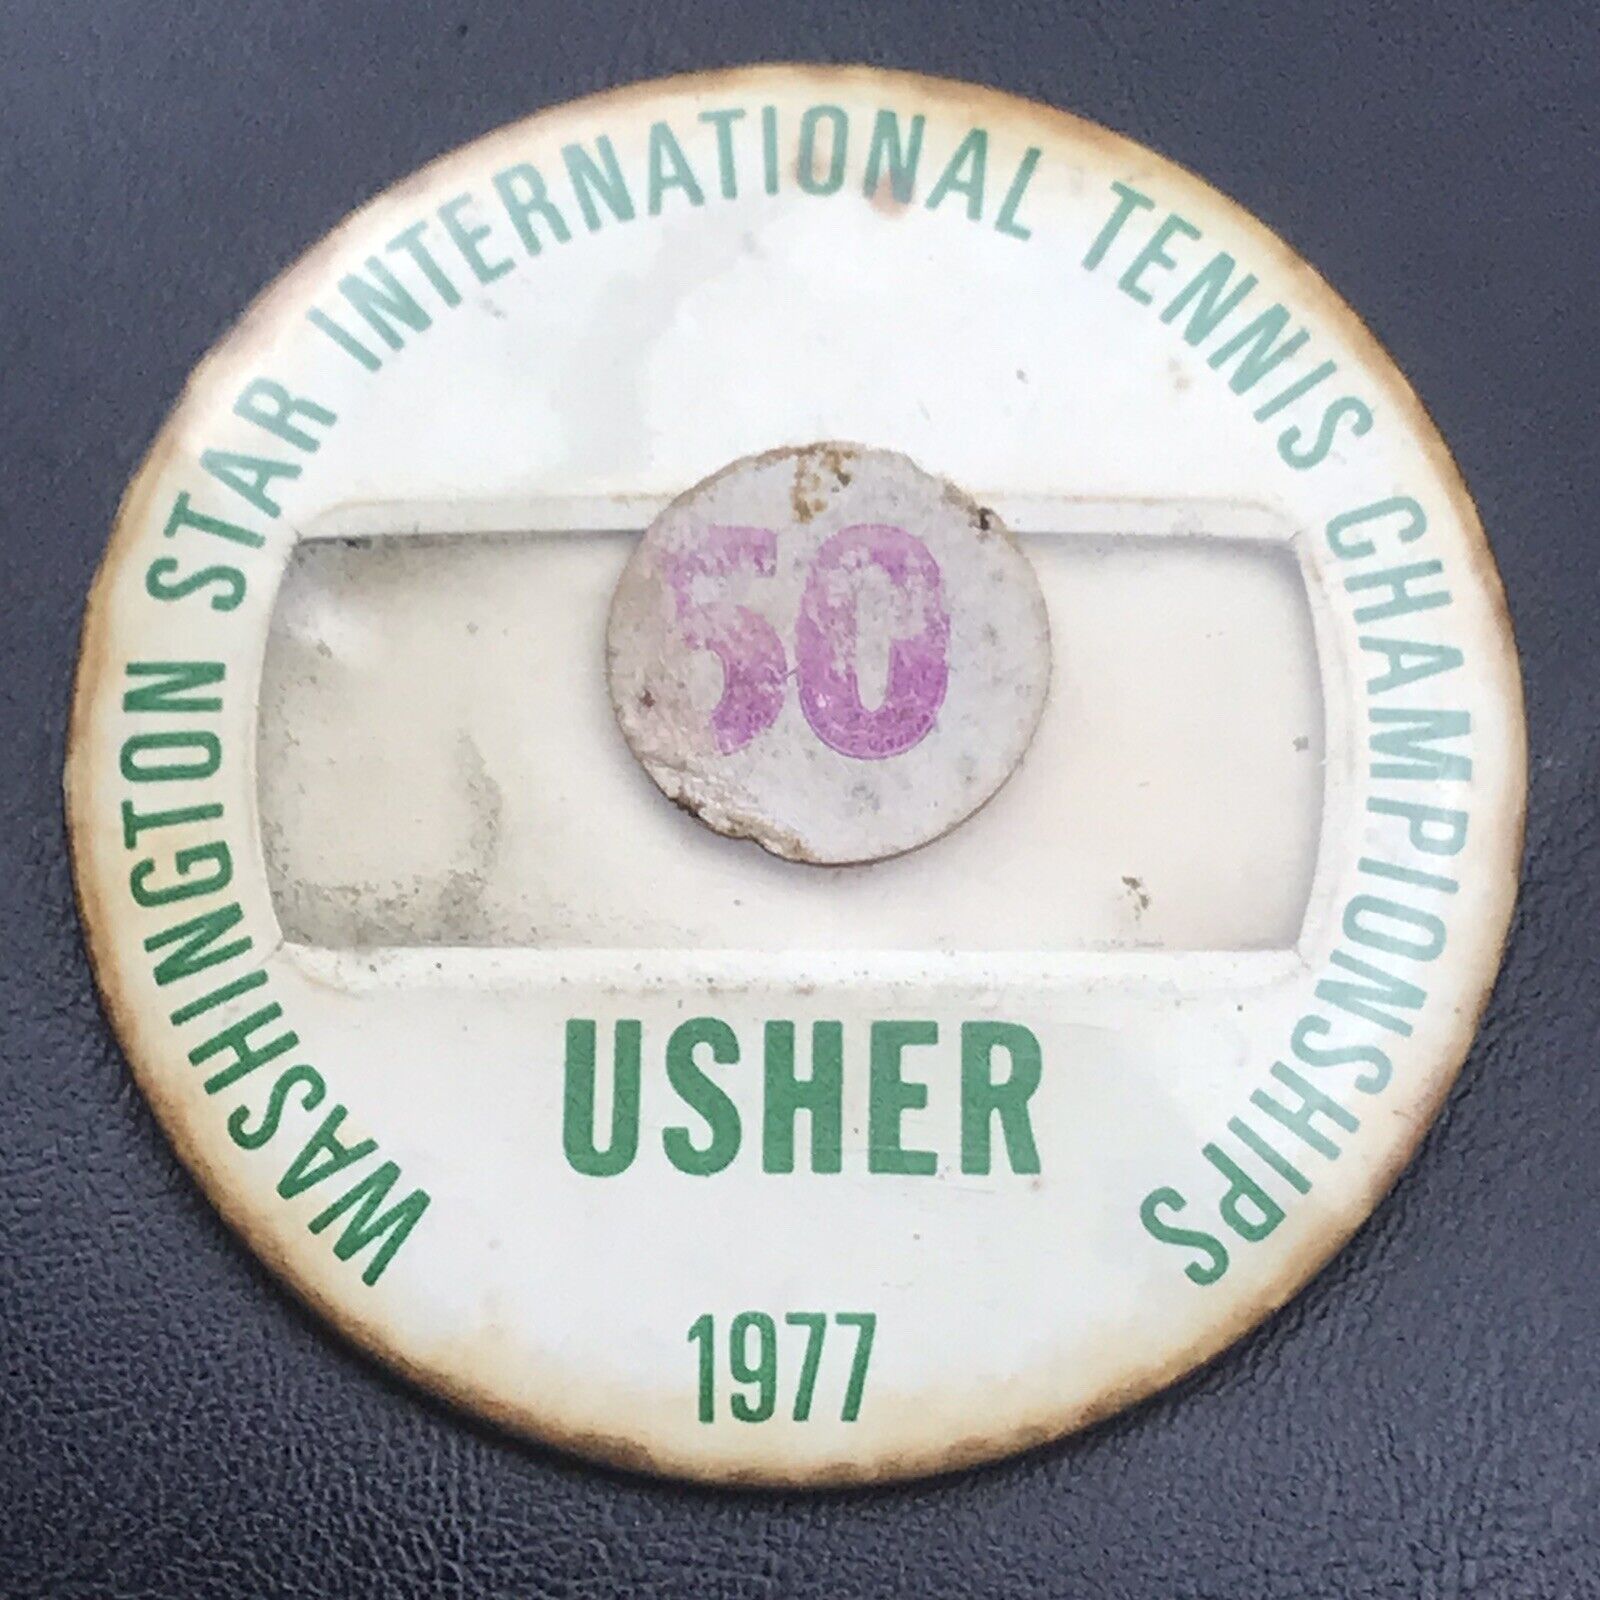 Washington Star International Tennis Championships USHER 1977 Vintage Pin Button